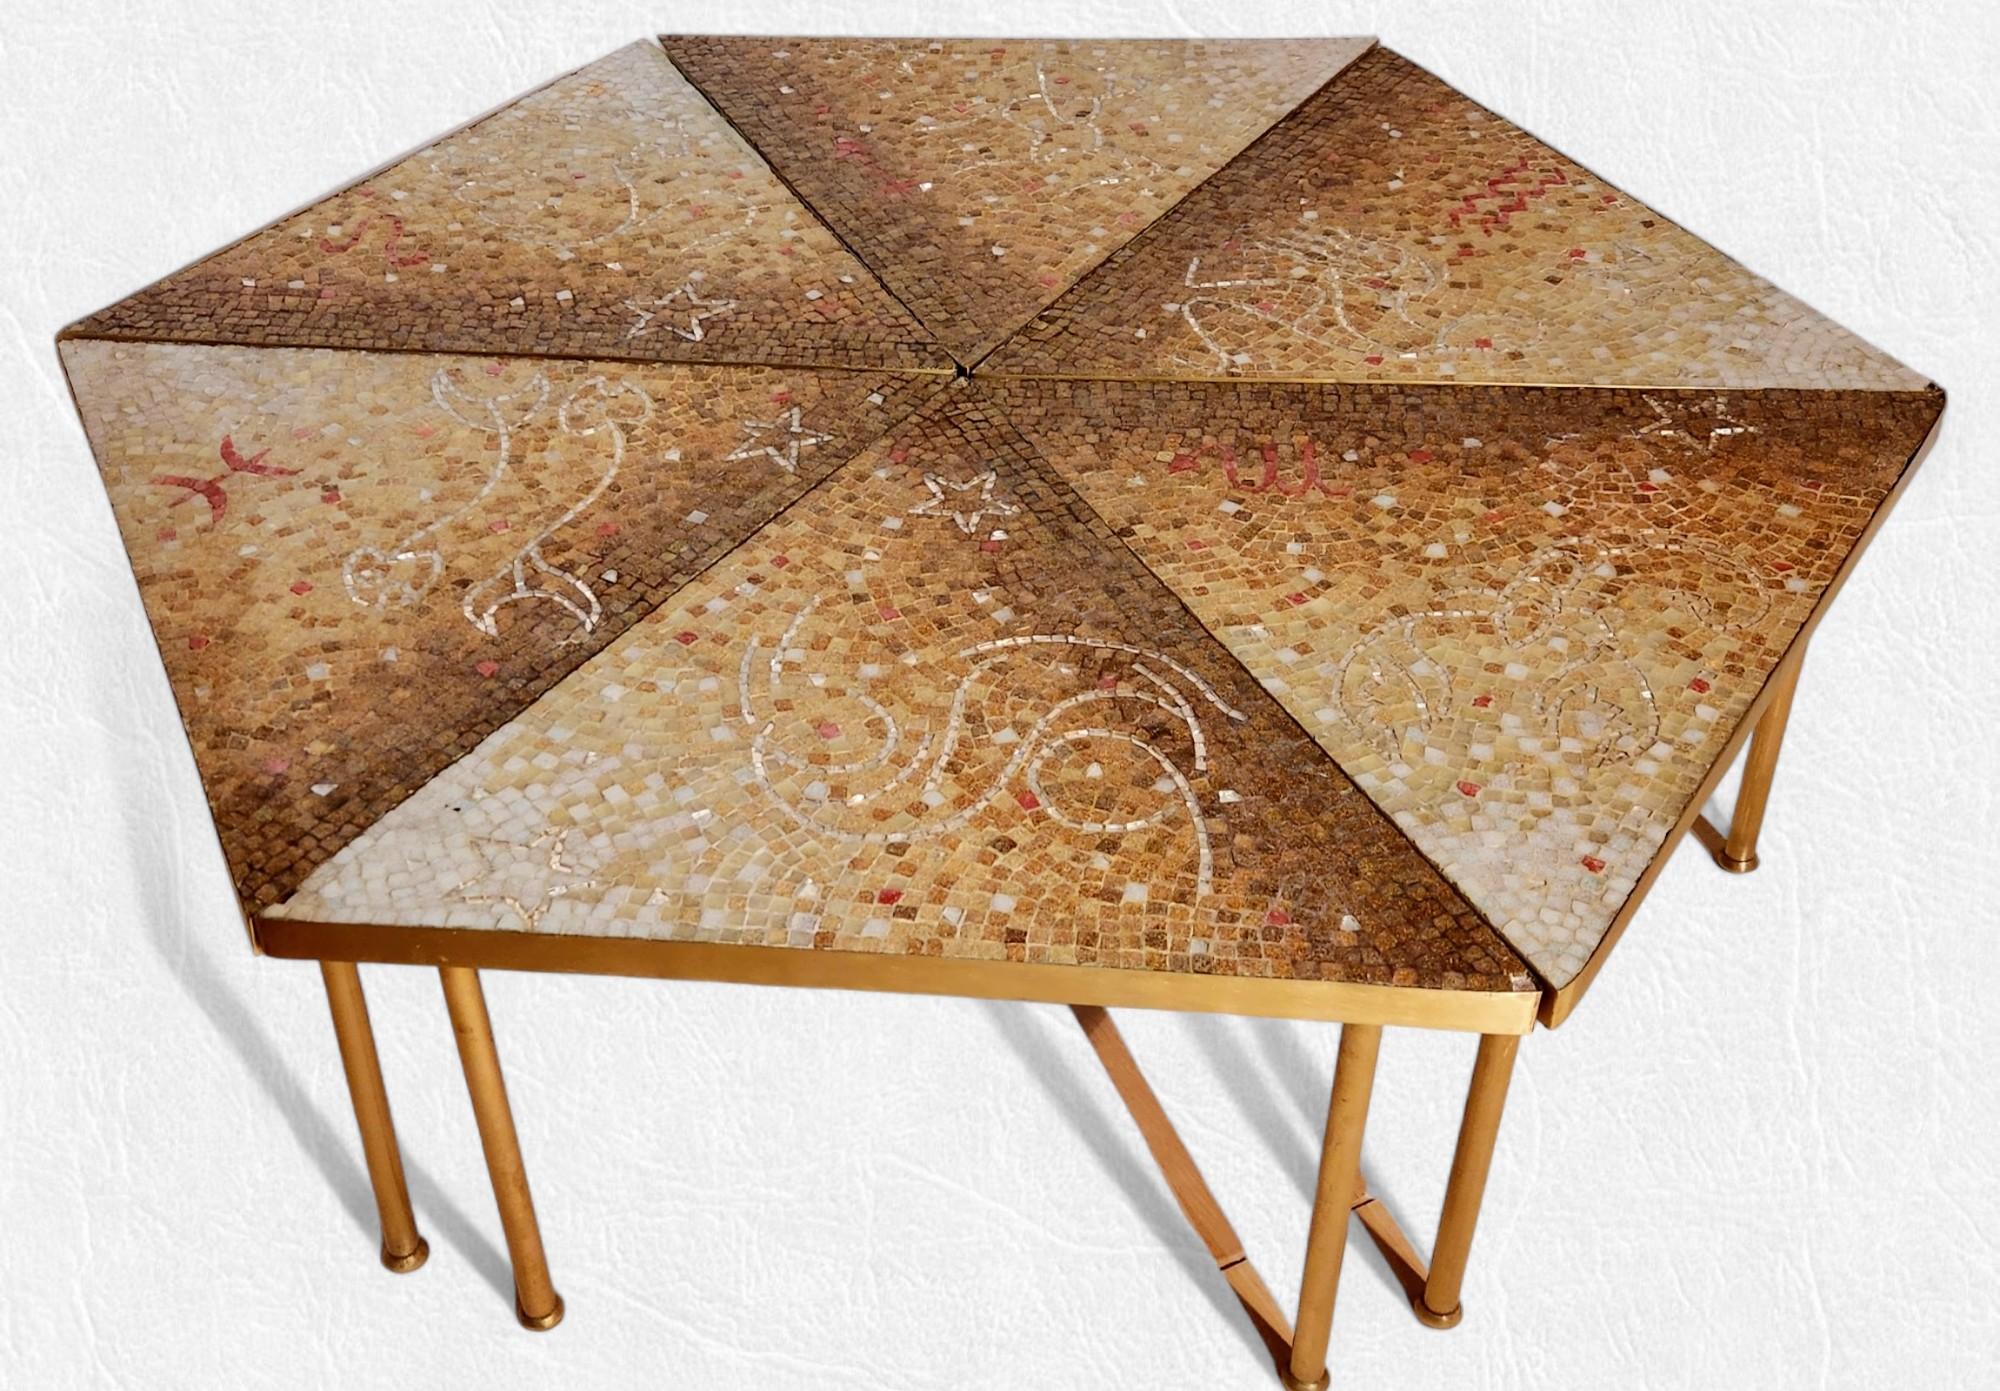 6 Piece Glass Mosaic Tile Coffee Table Genaro Alvarez Cosmic, Mexico, 1950s For Sale 3